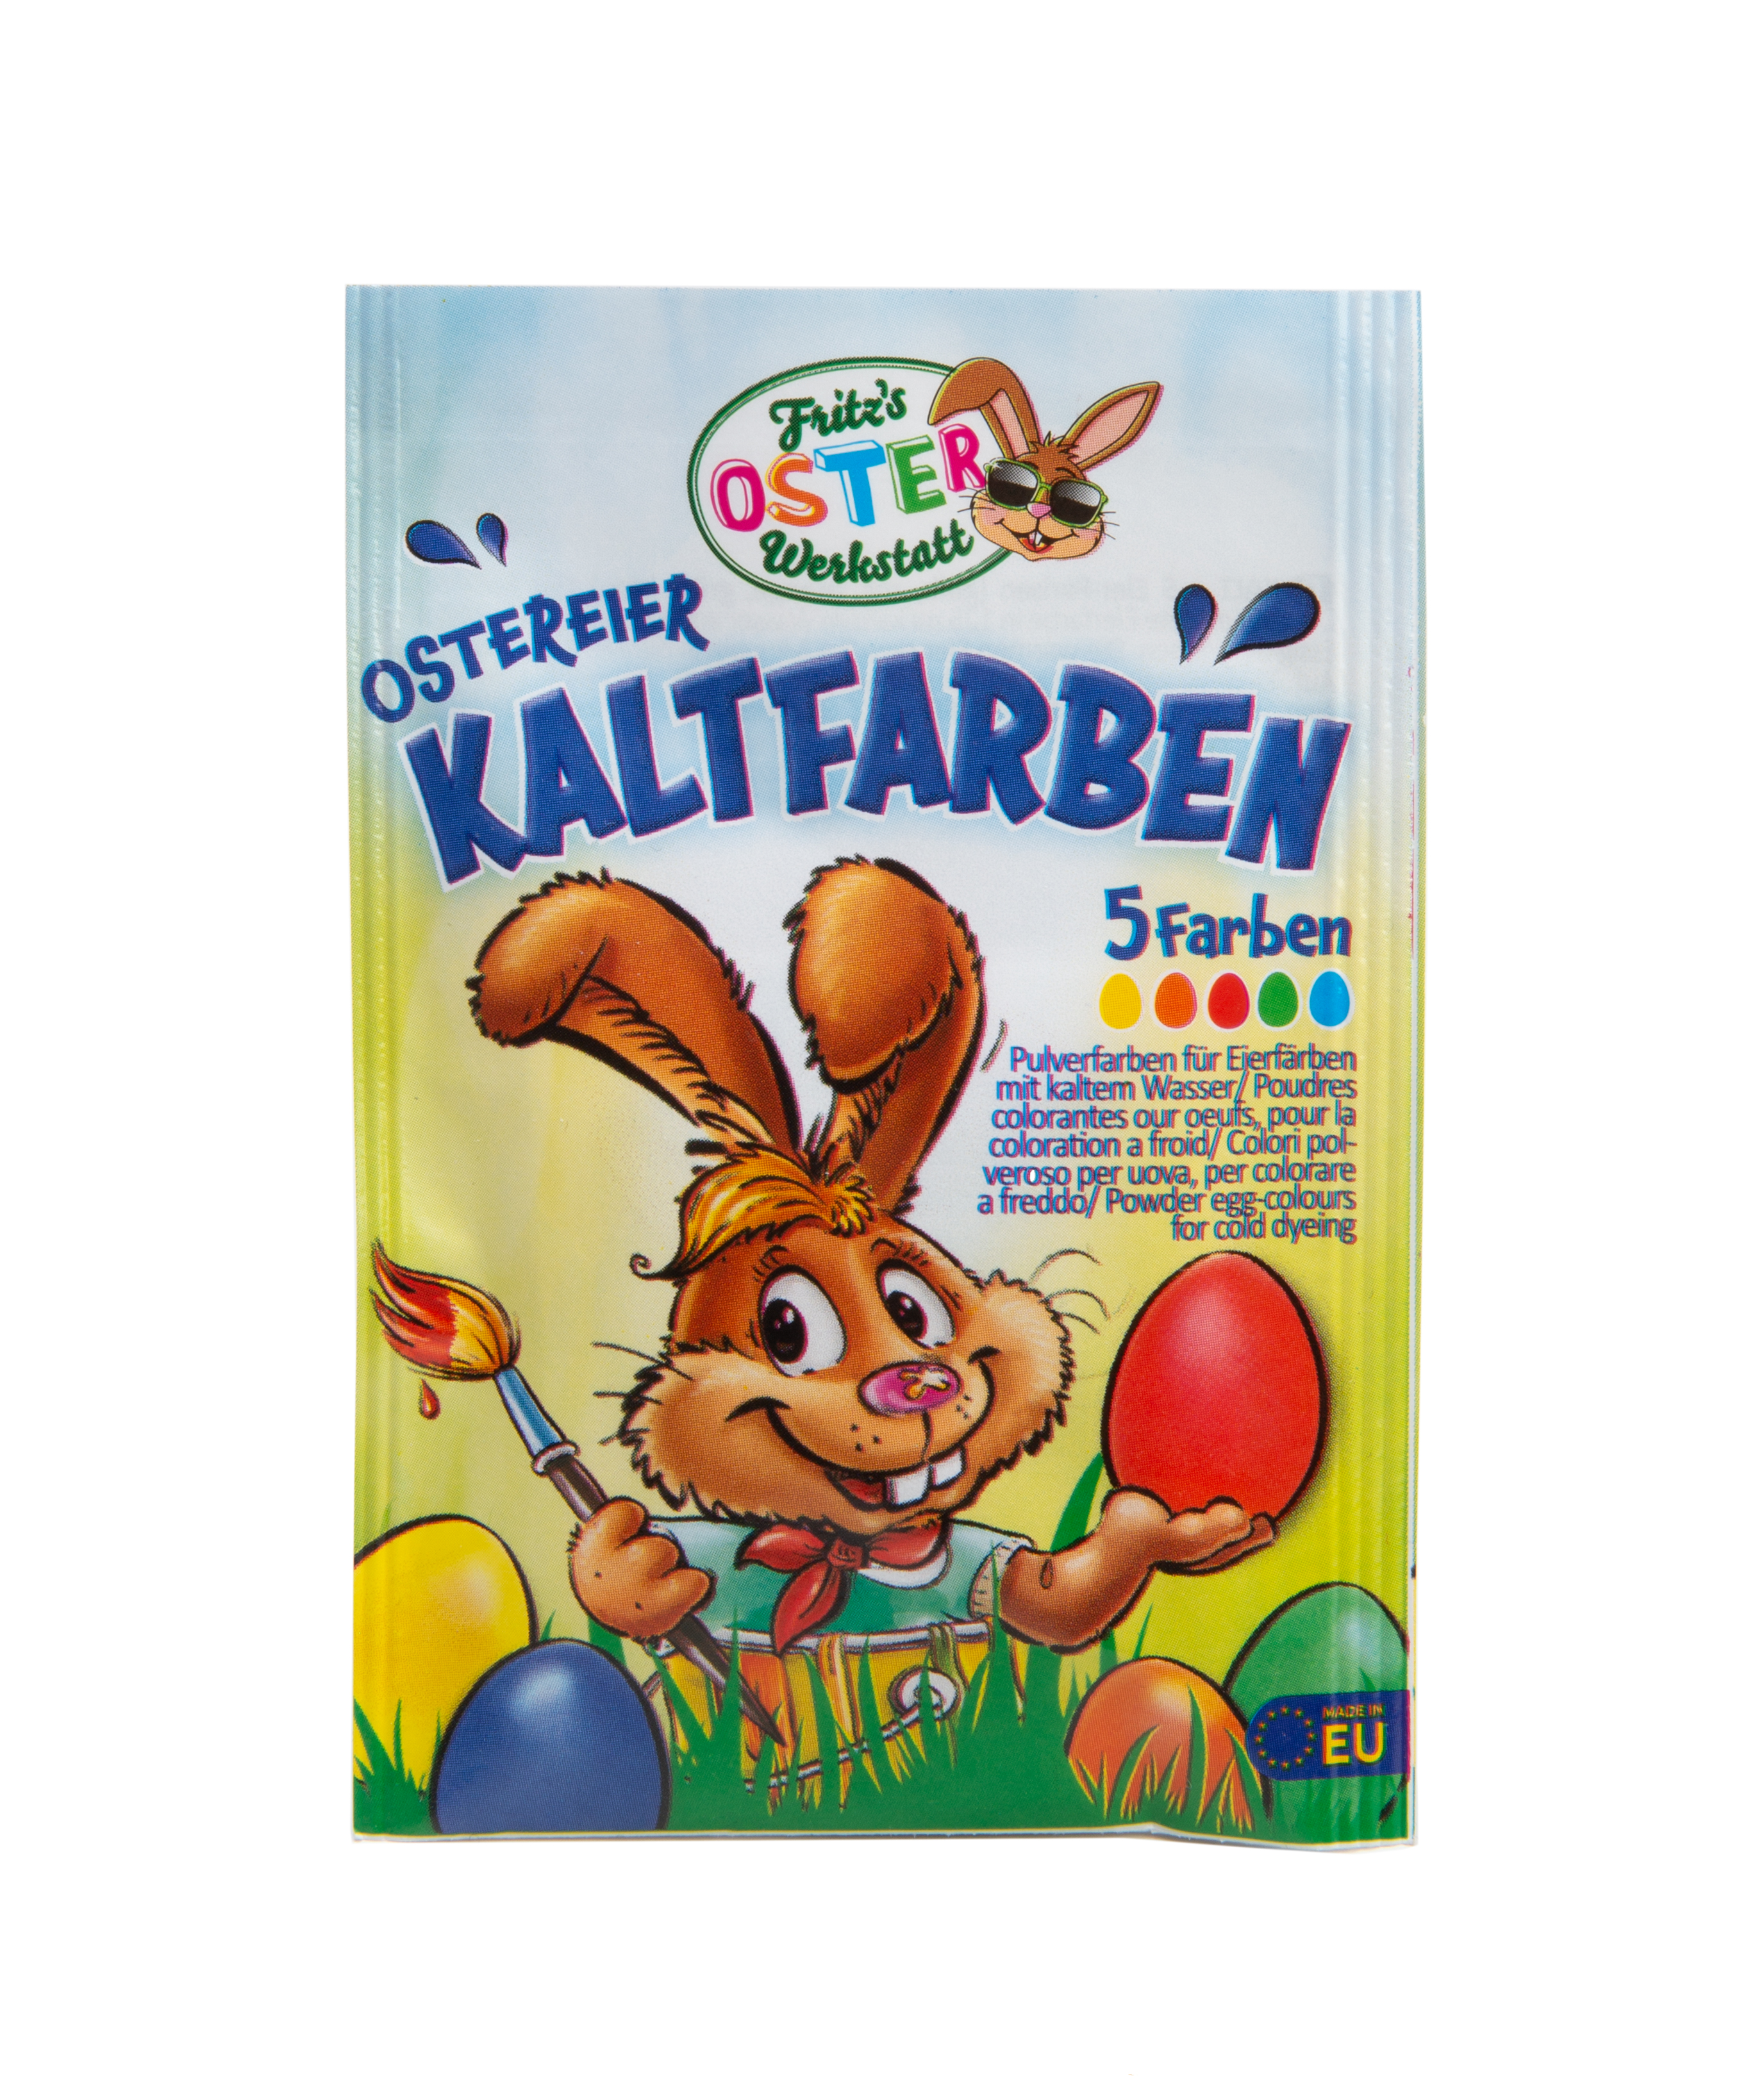 Ostereier Kaltfarben Set 5 Farben Fritz´s Osterwerkstatt